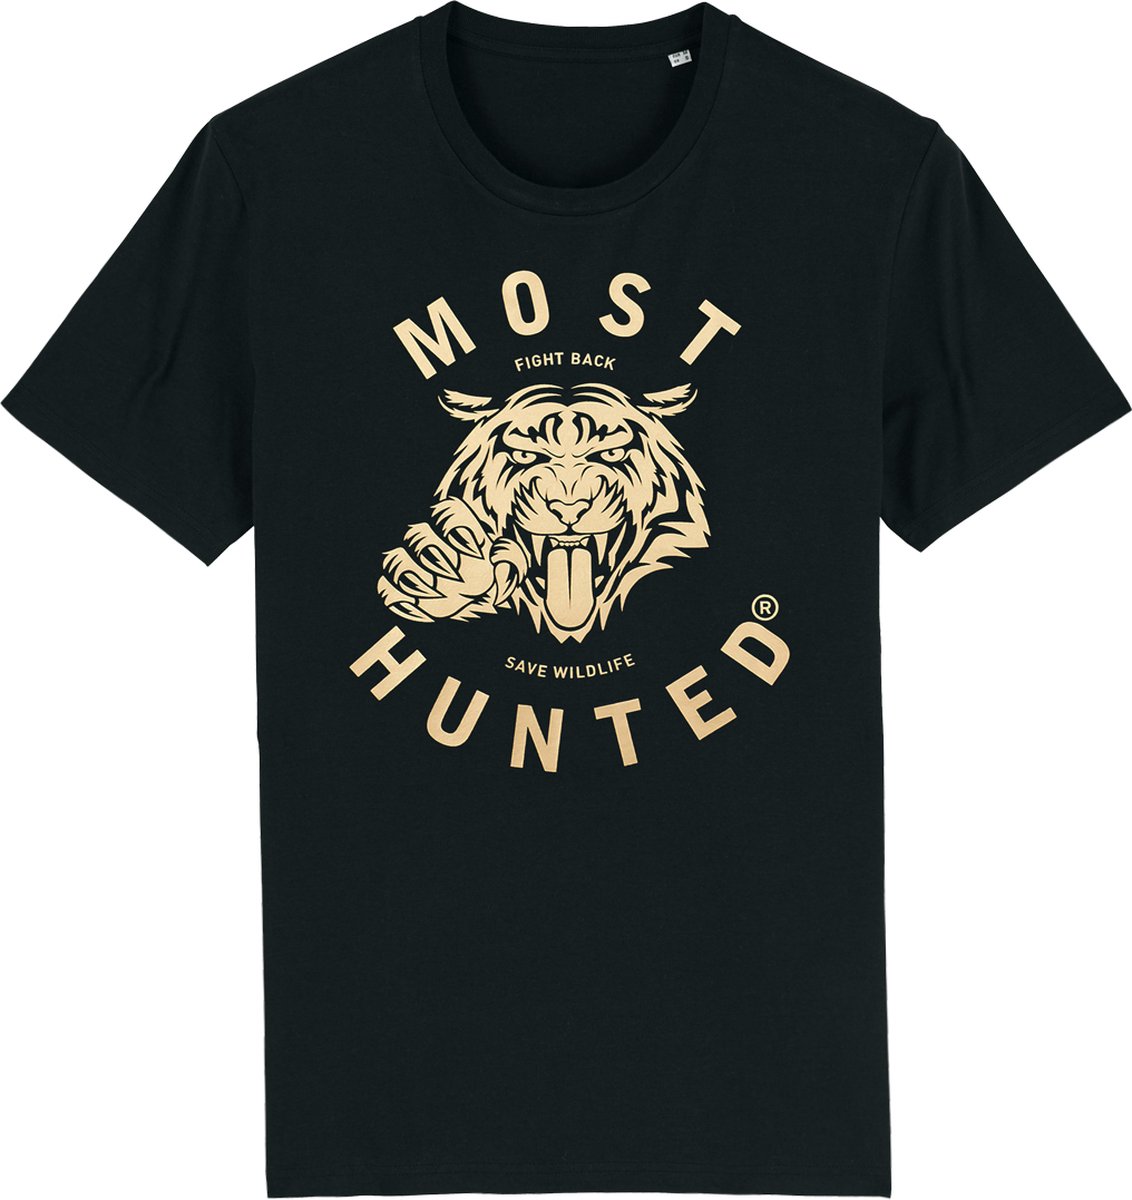 Most Hunted Tijger Claw - Unisex T-shirt - Zwart-Goud - Maat XS